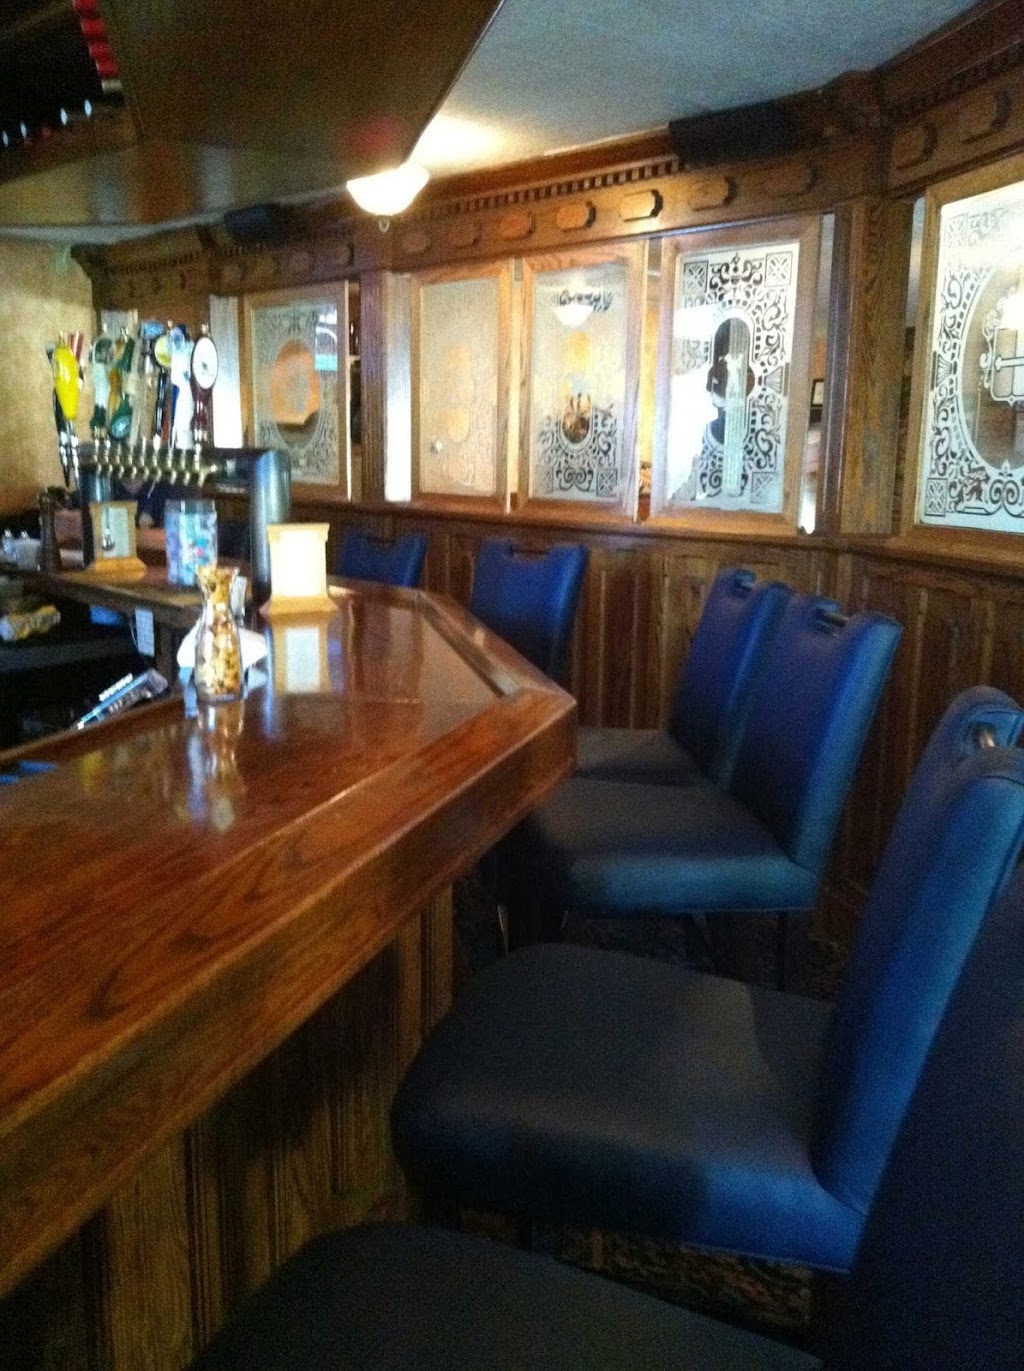 The Brick Tavern Inn | 2460 N Old Bethlehem Pike, Quakertown, PA 18951 | Phone: (215) 529-6488